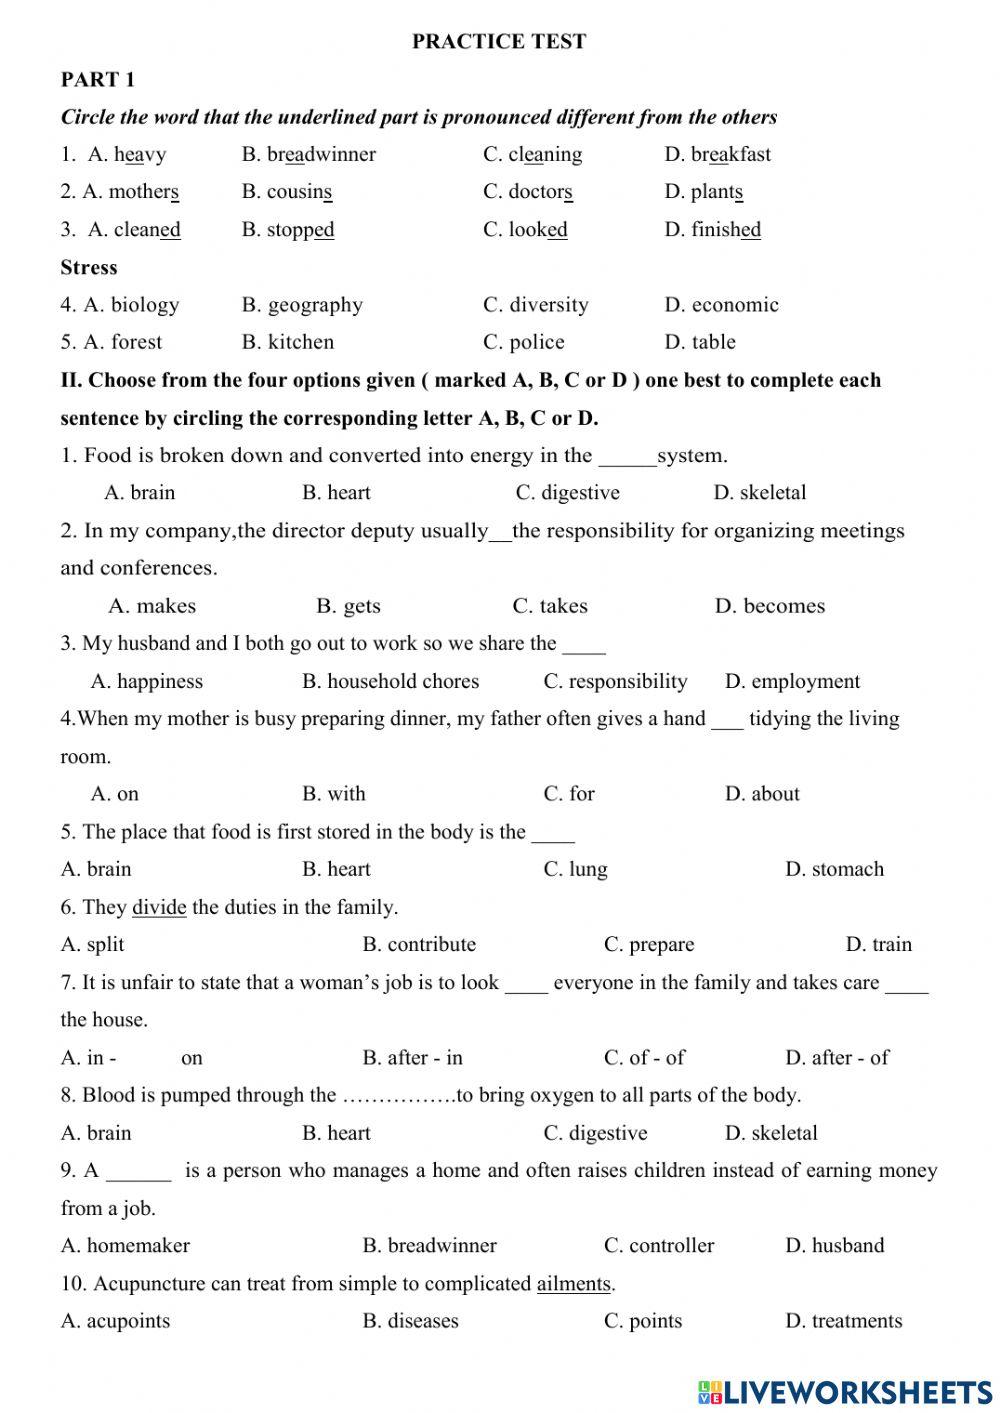 Practice test MID TERM ENGLISH 10 PART 1